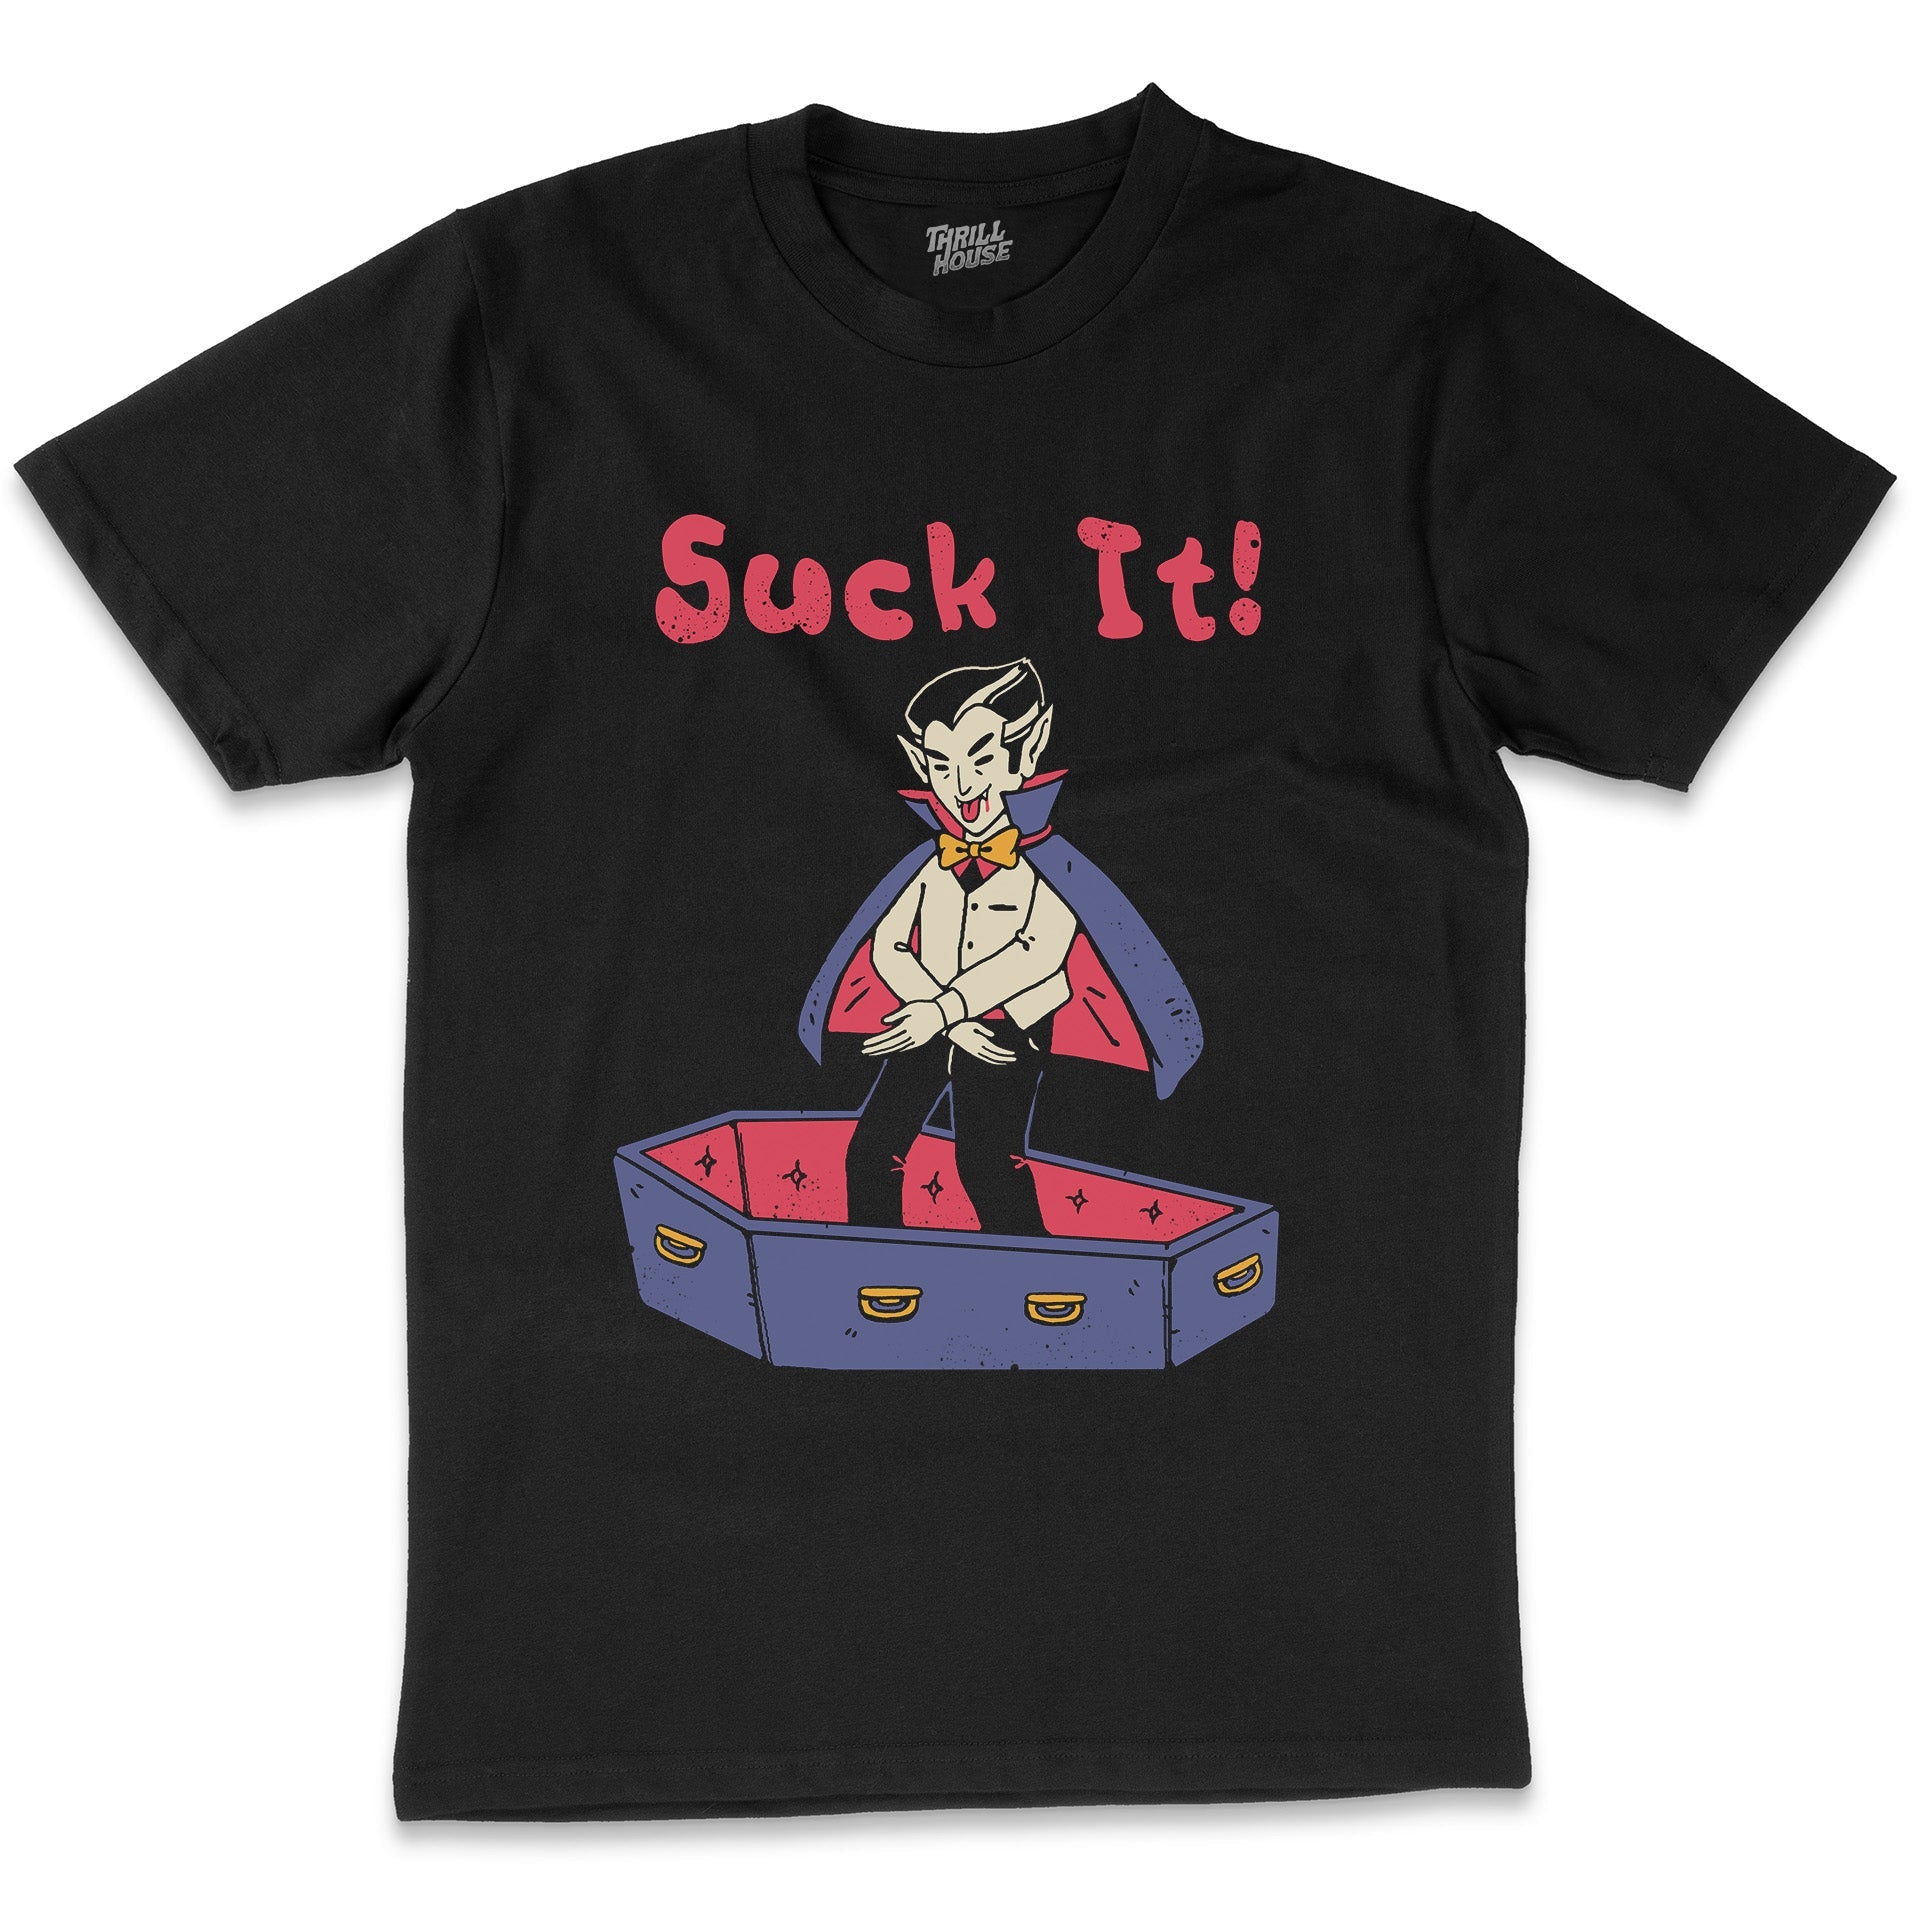 Suck It Funny Vampire Blood Parody Monster Slogan Cotton T-Shirt